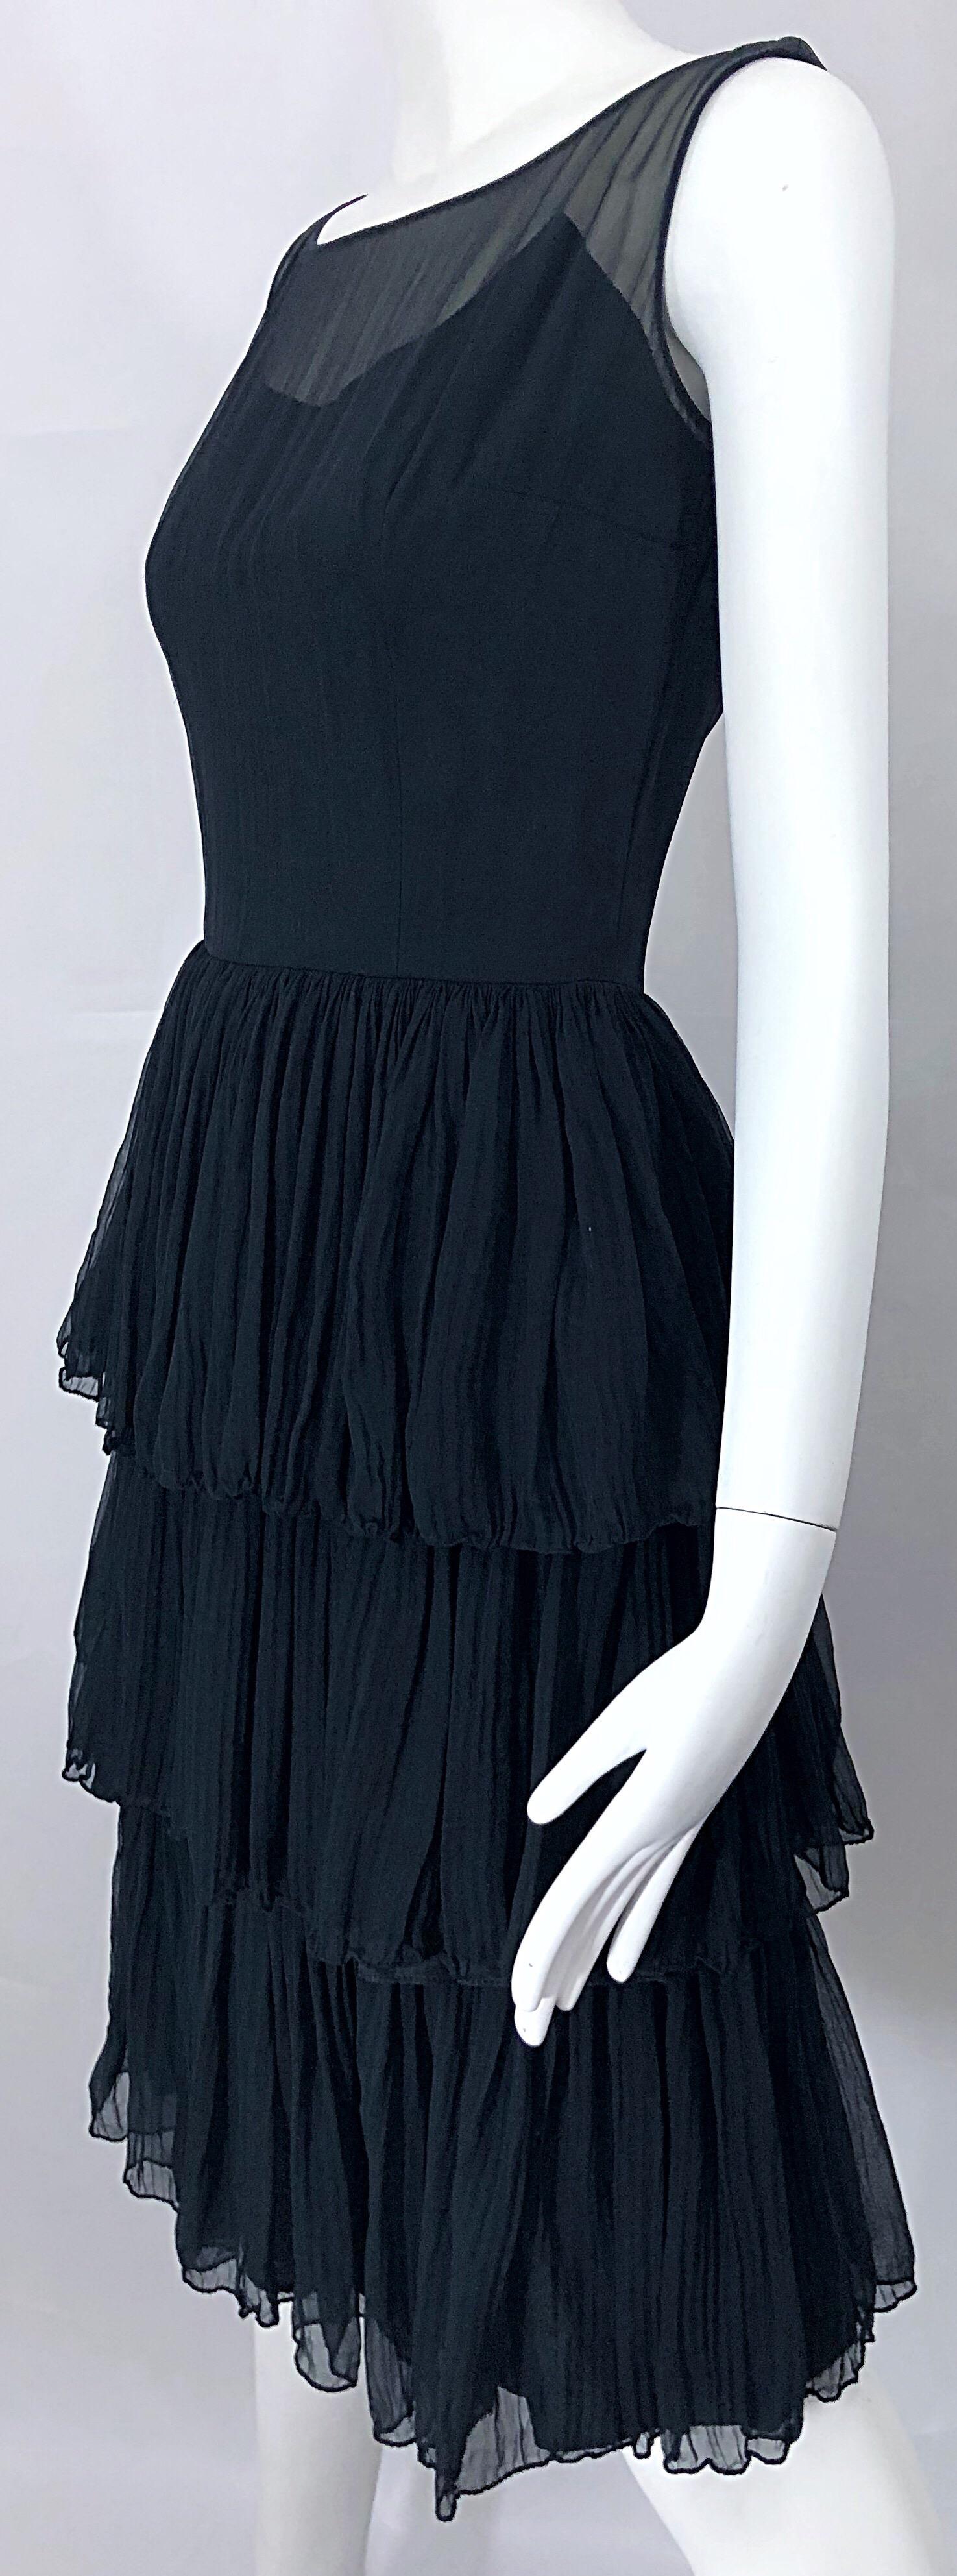 1950s Suzy Perette Black Silk Chiffon Nude Illusion Couture Vintage 50s Dress For Sale 5